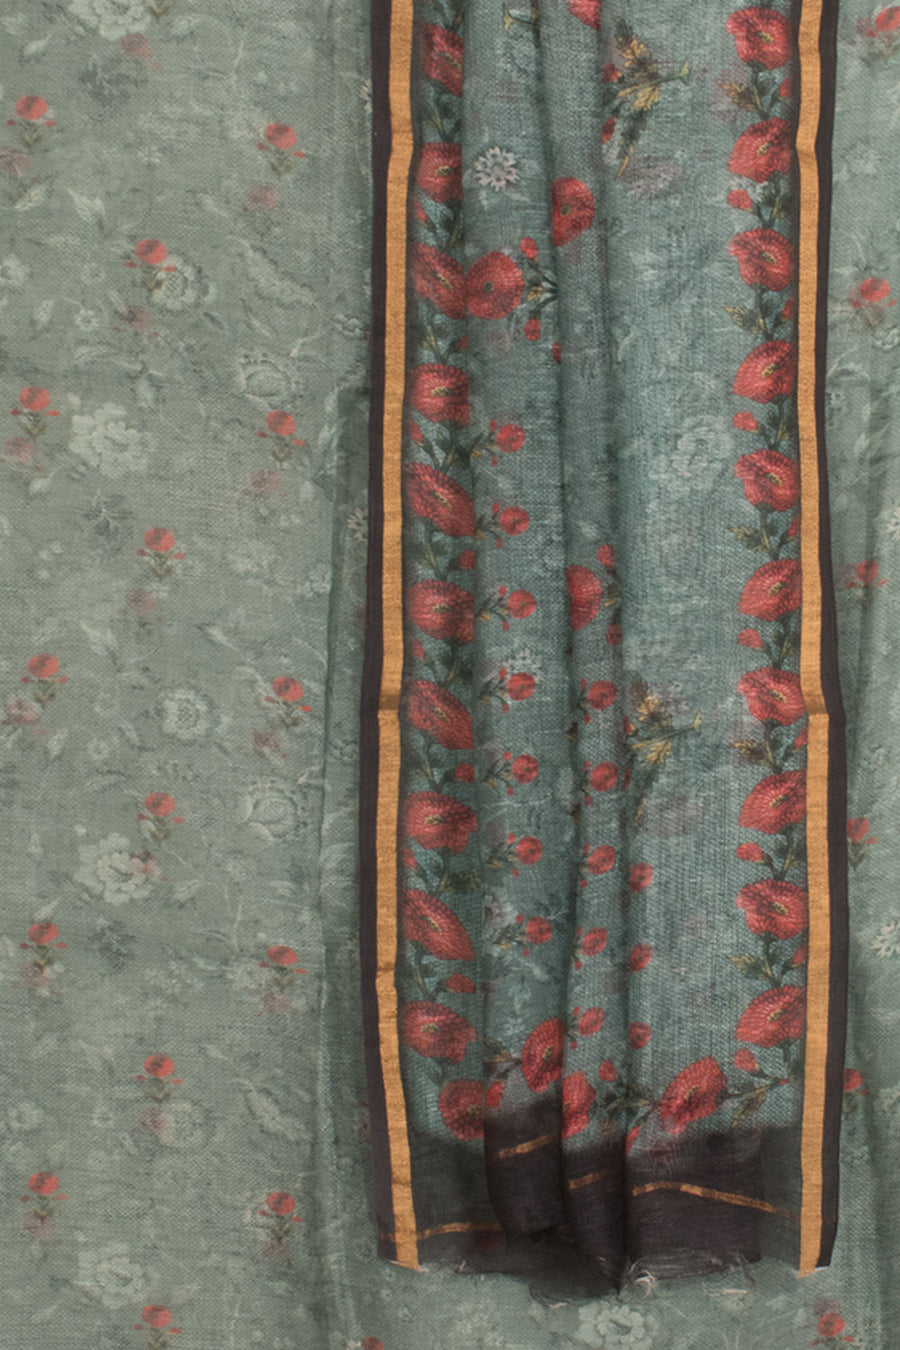 Digital Printed Linen 2-Piece Salwar Suit Material with Floral Design